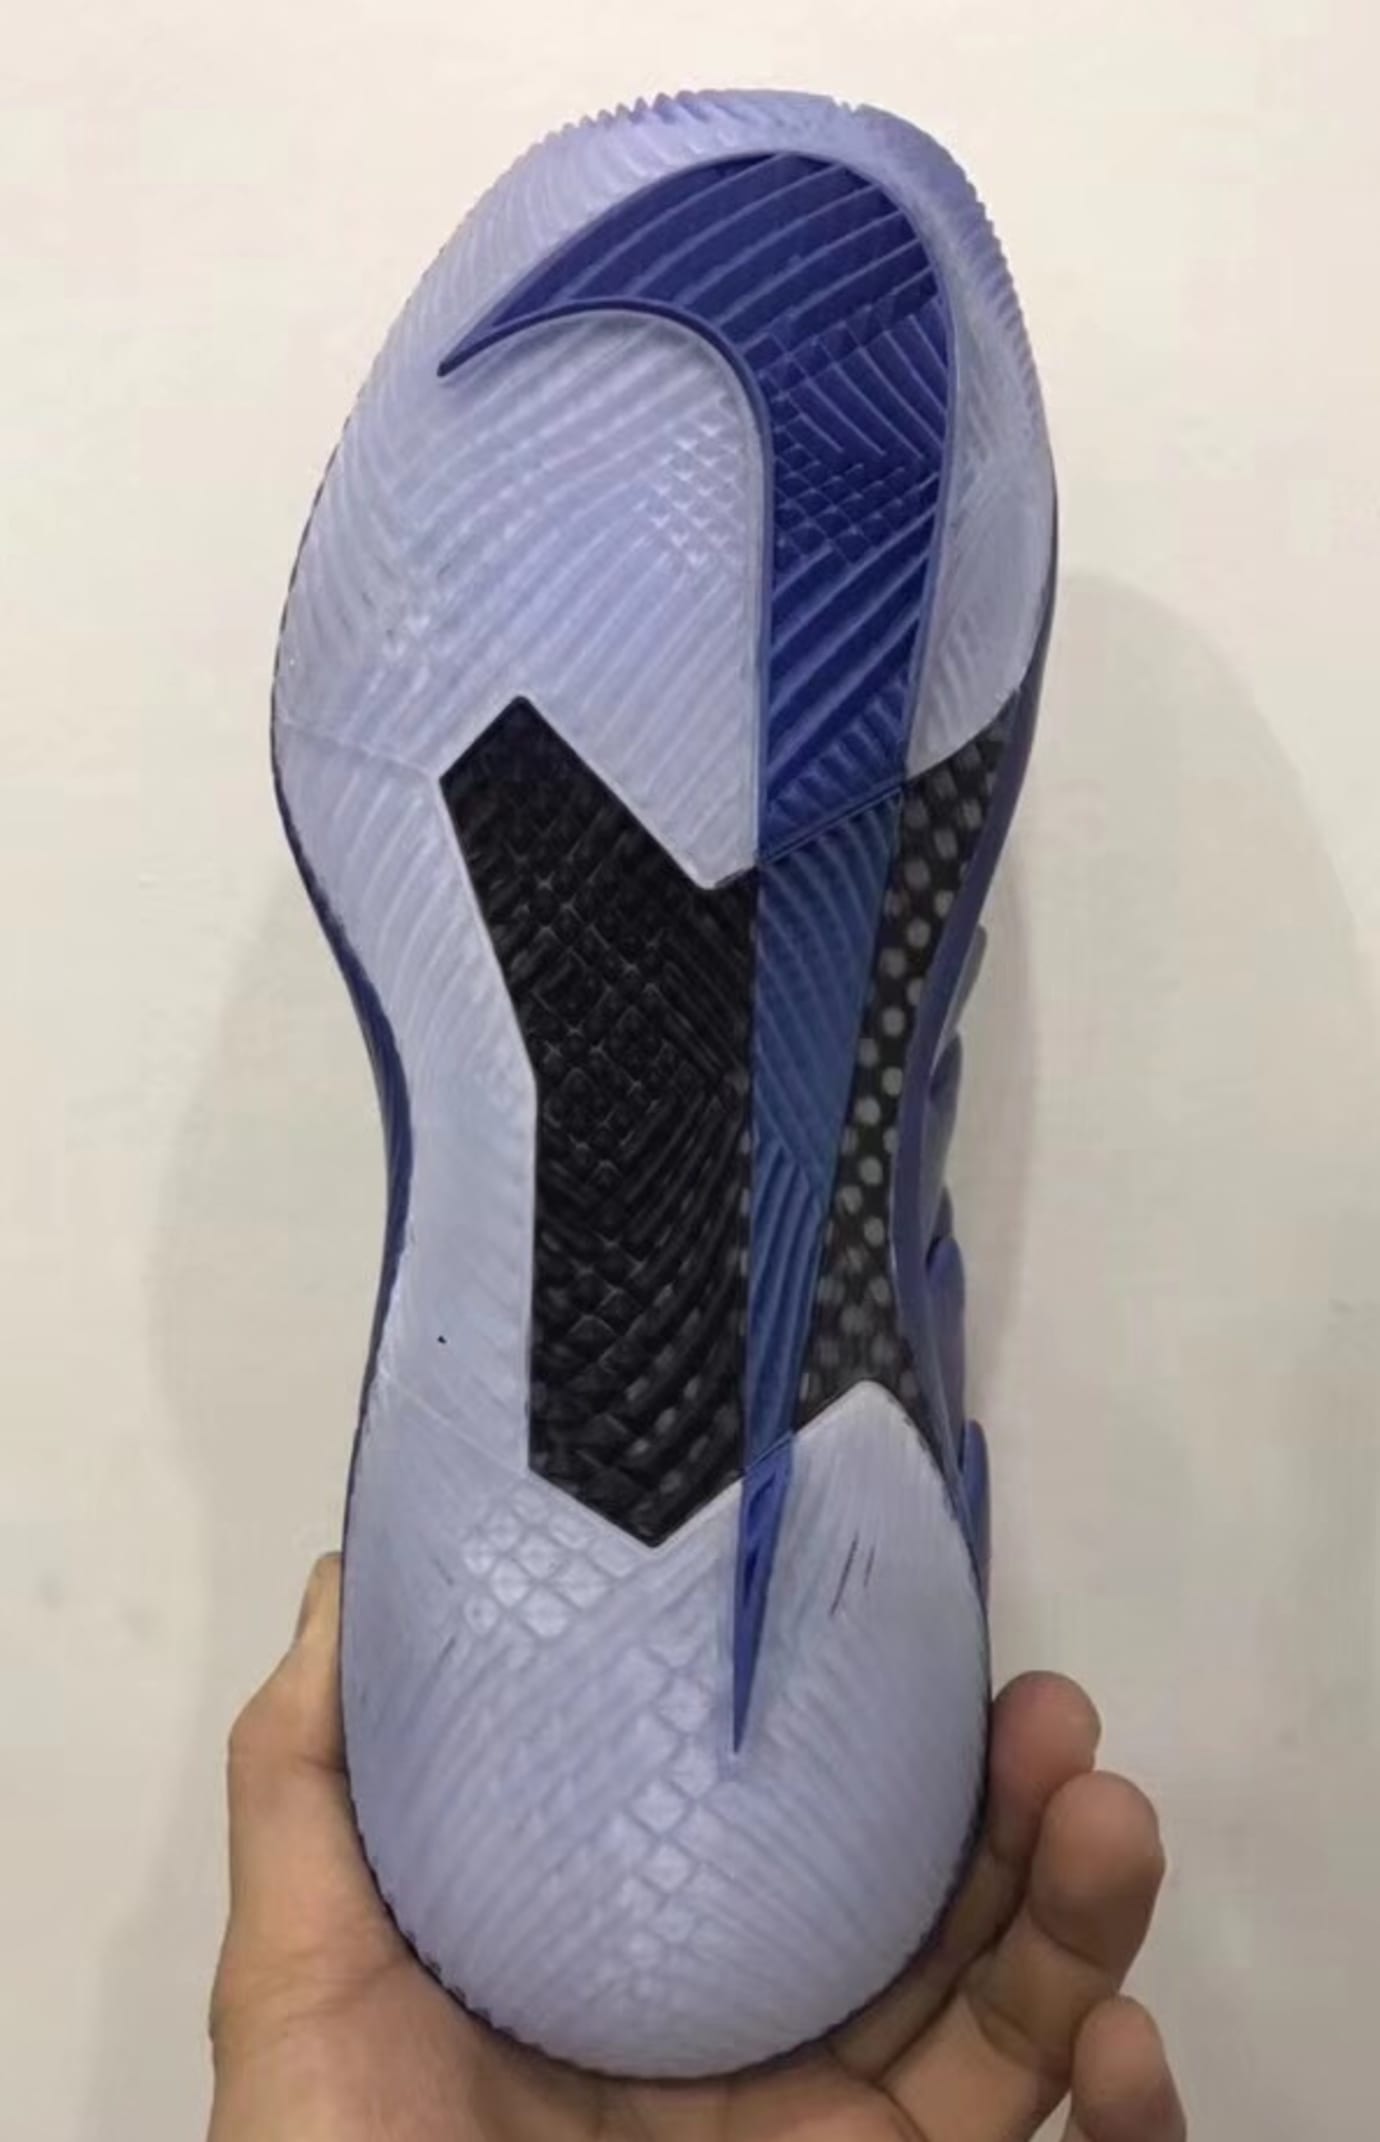 Nike Air Foamposite One Vapor X (Sole)